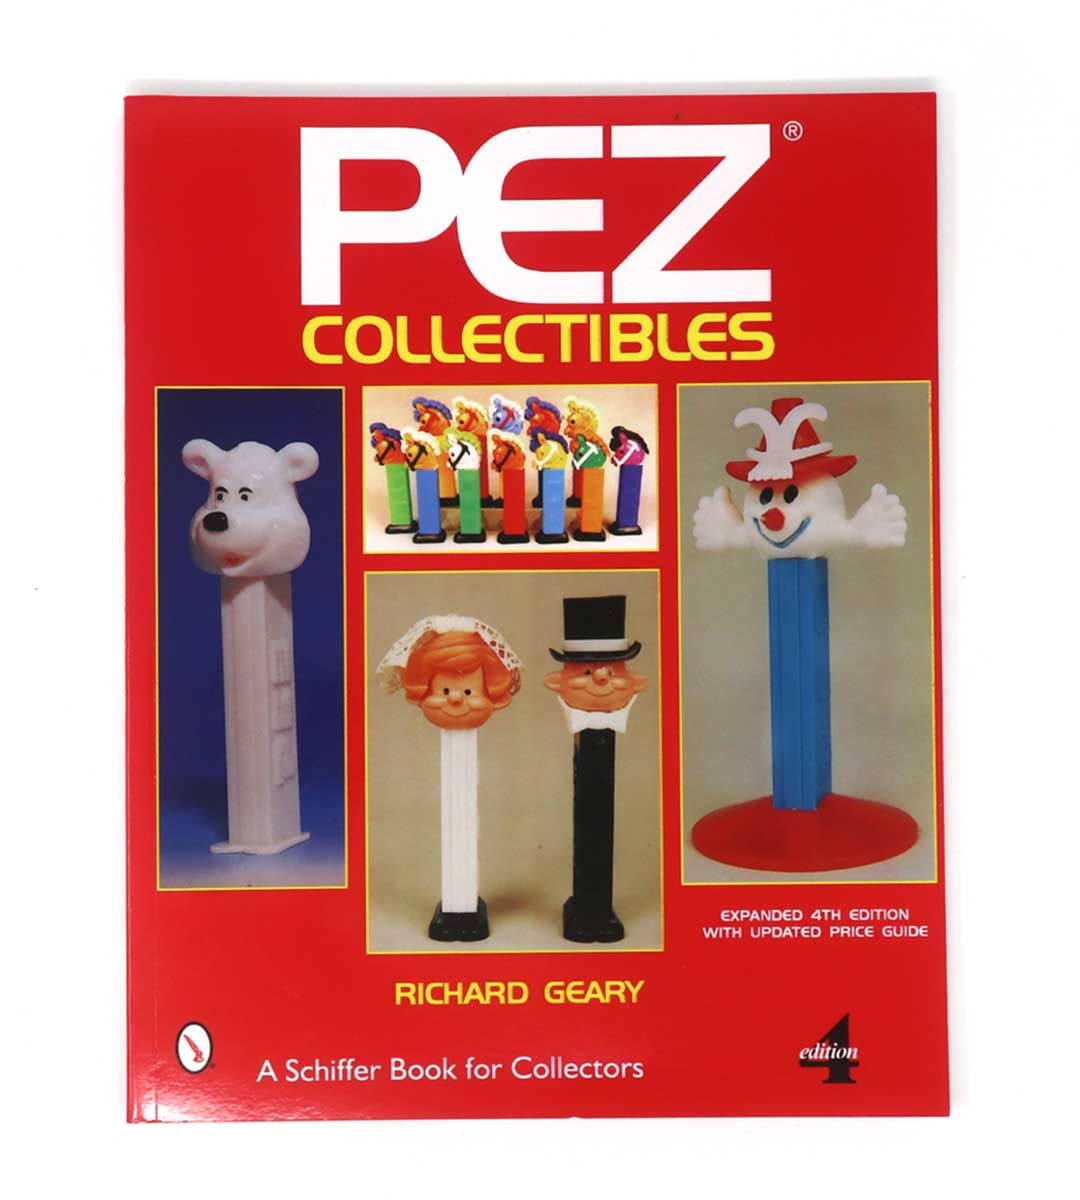 Pez Collectibles - Un libro de Schiffer para coleccionistas